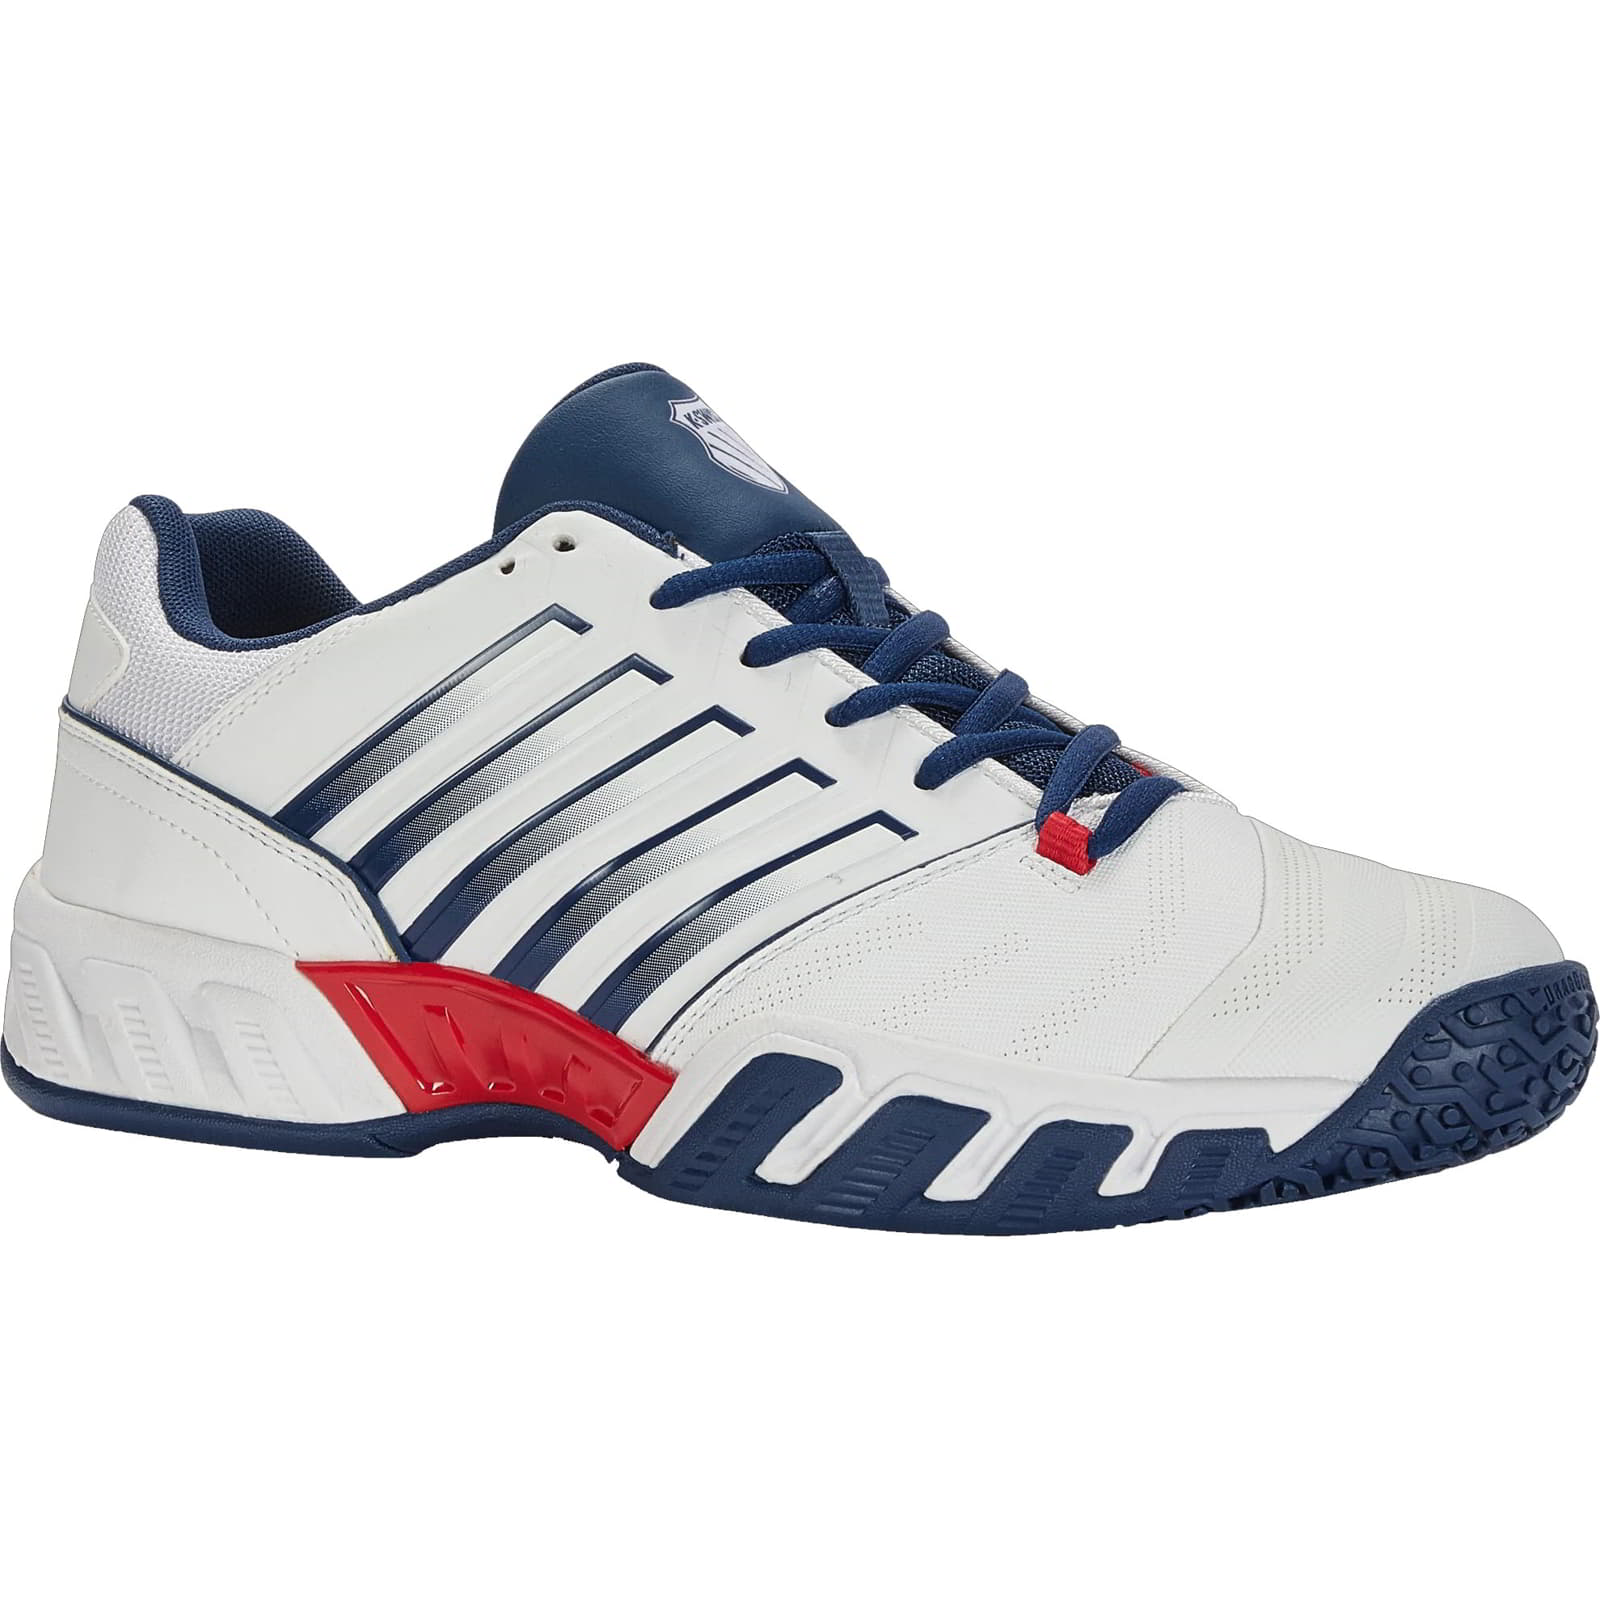 K-Swiss Bigshot Light 4 Omni Tennis Shoes Trainers - UK 8